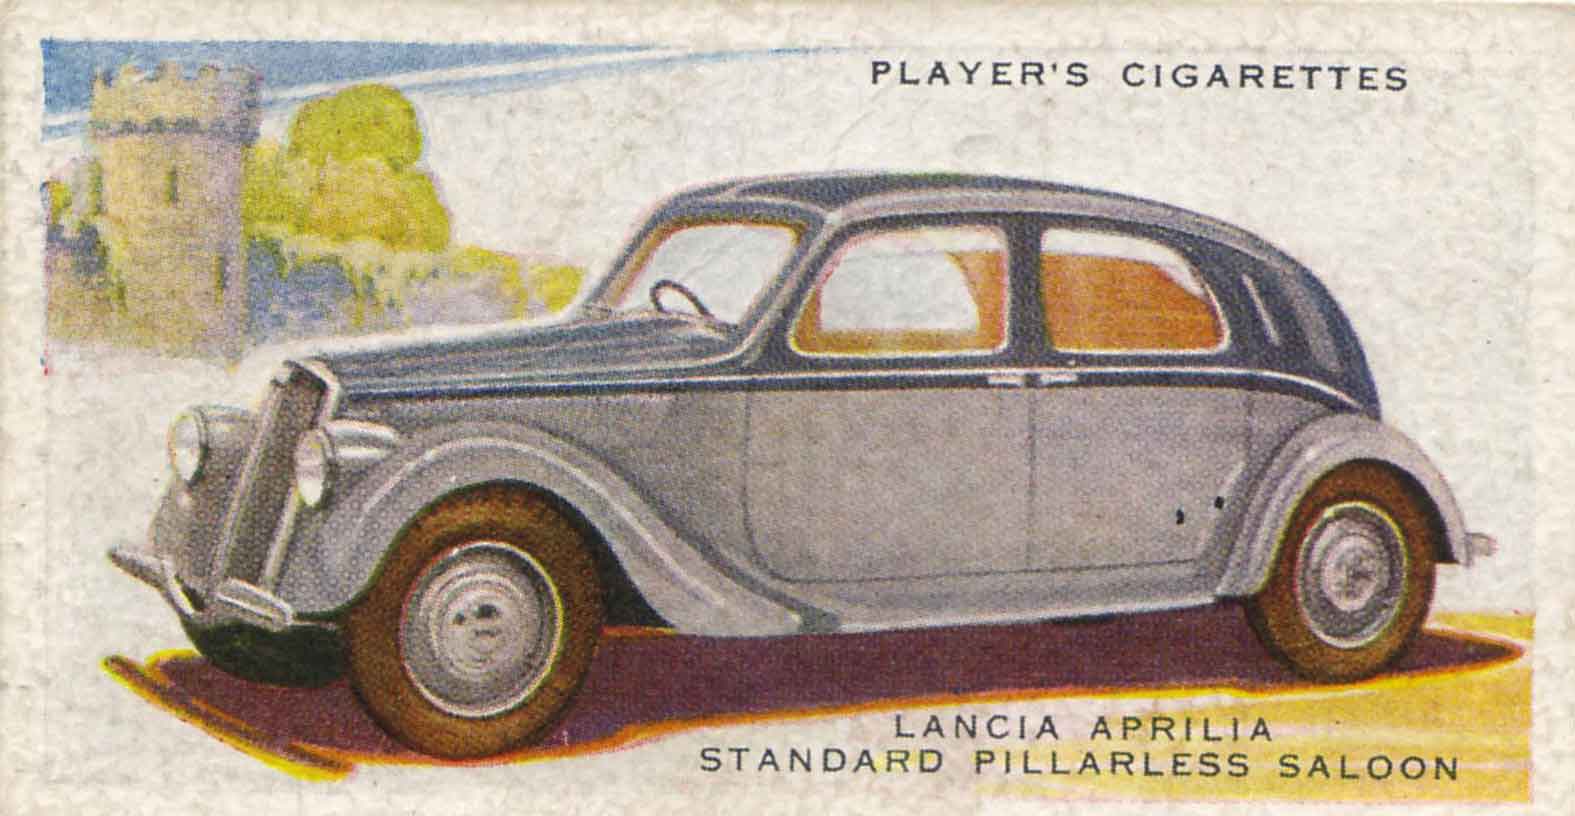 Lancia Aprilia Standard Pillarless Saloon. 1937 cigarette card.